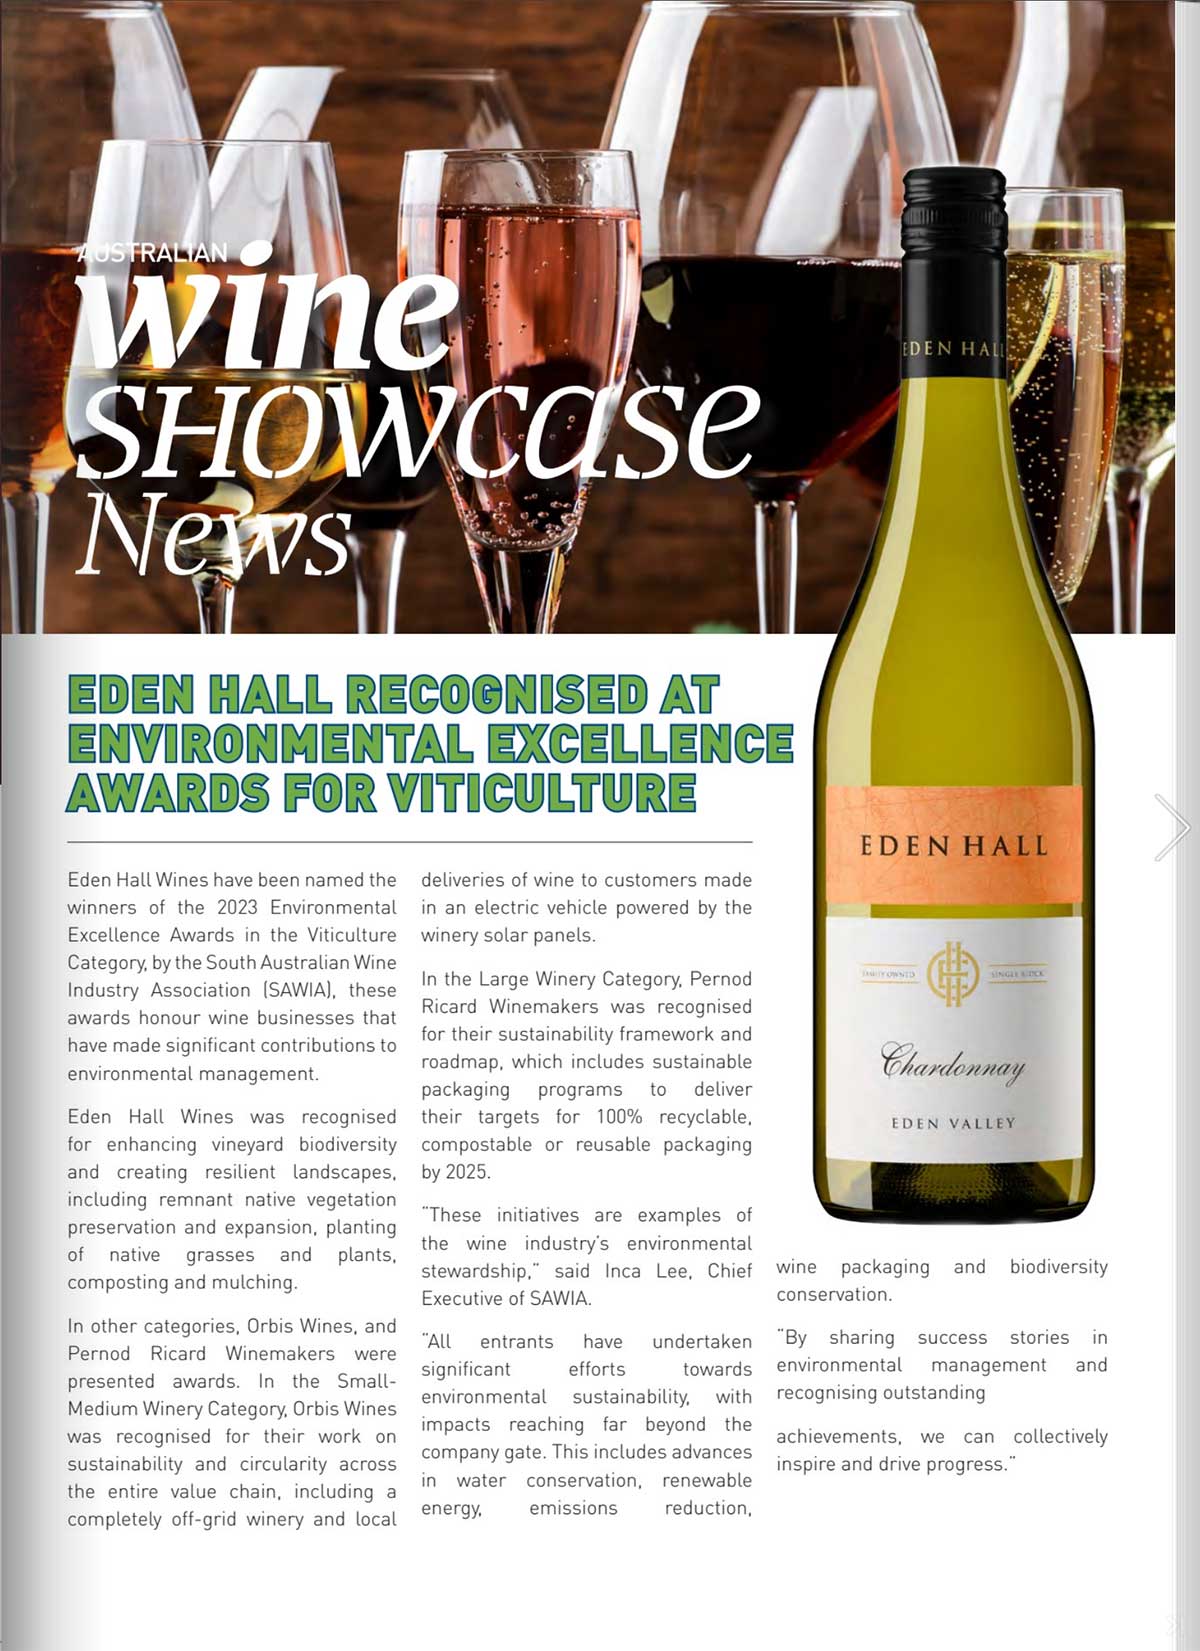 Australian Wine Showcase News - Award For Viticulture is Eden Hall